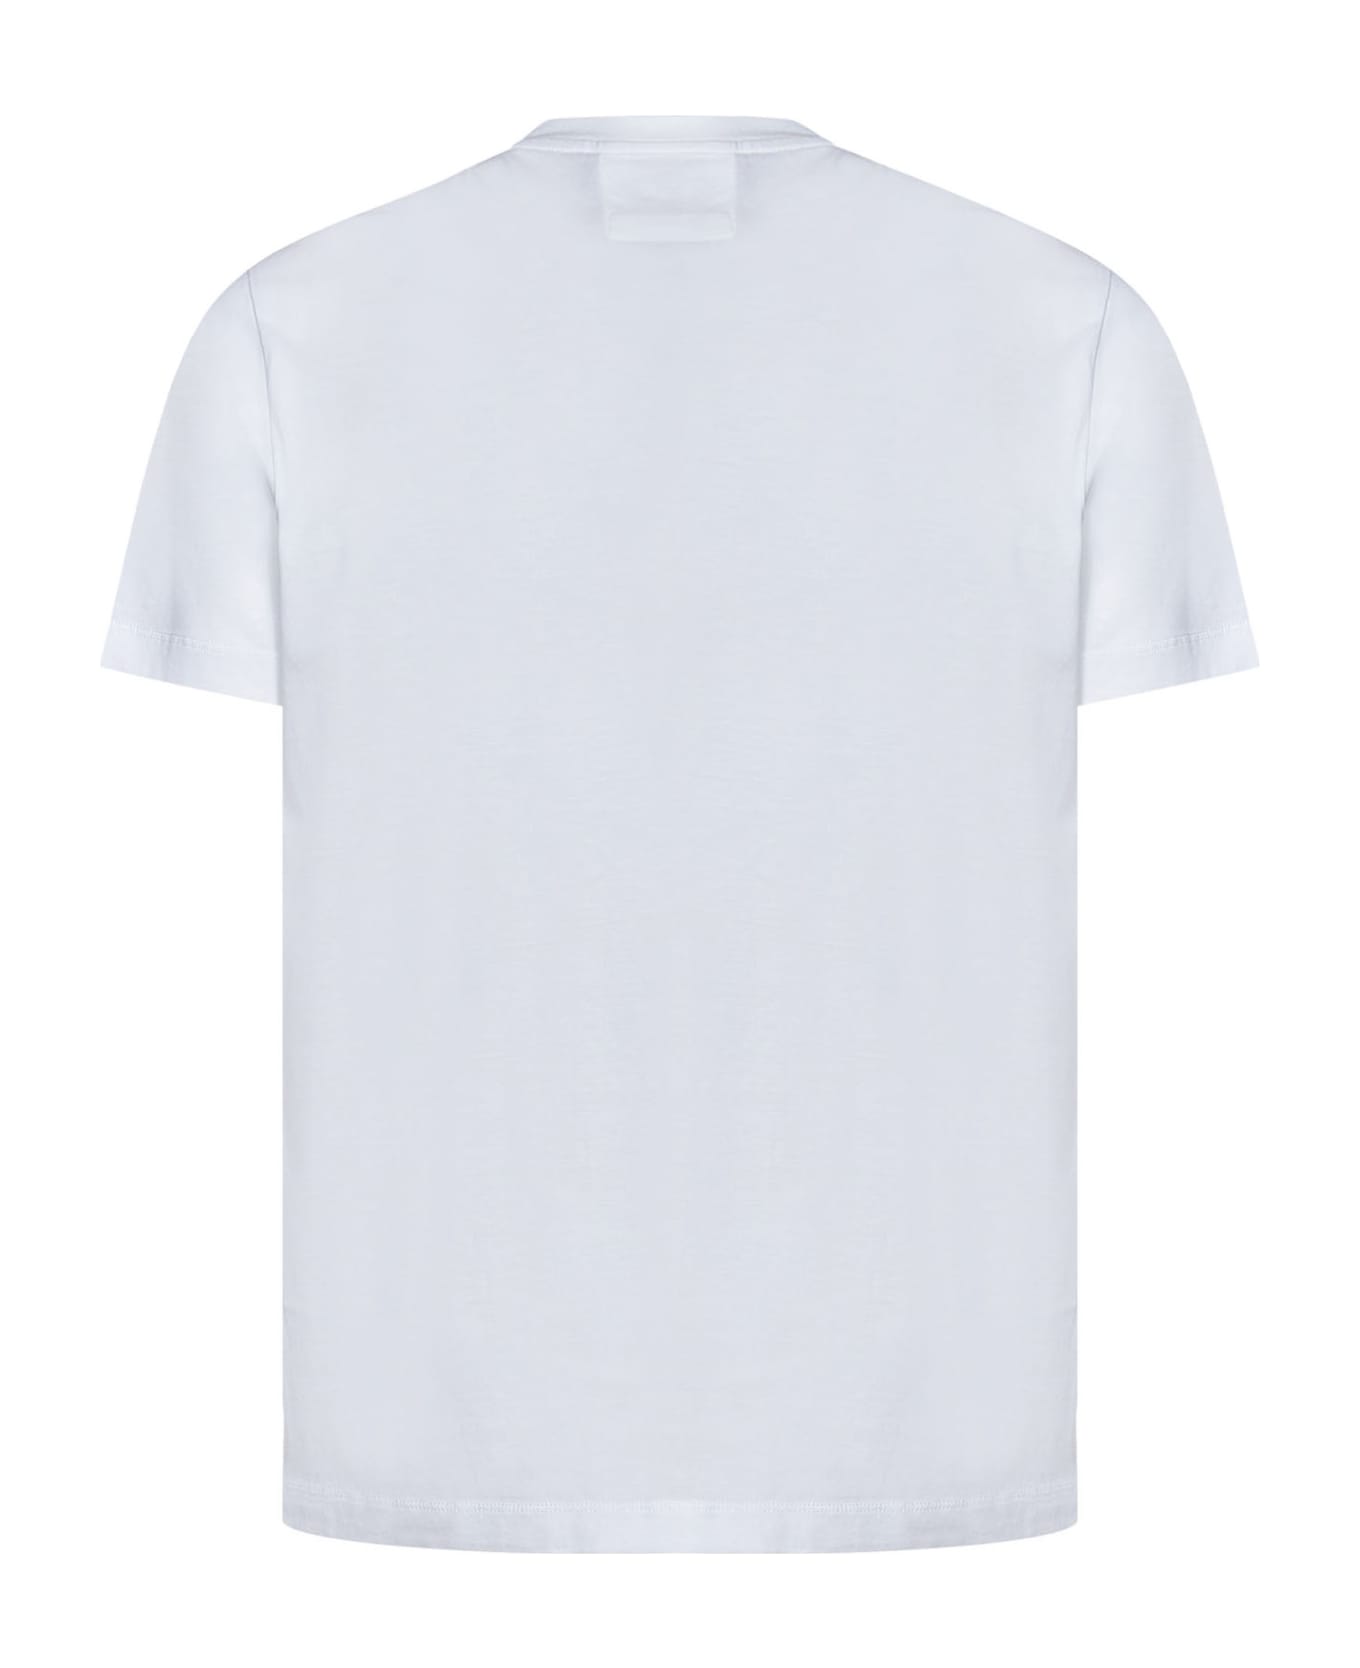 Emporio Armani T-shirt - Bianco ottico aquila